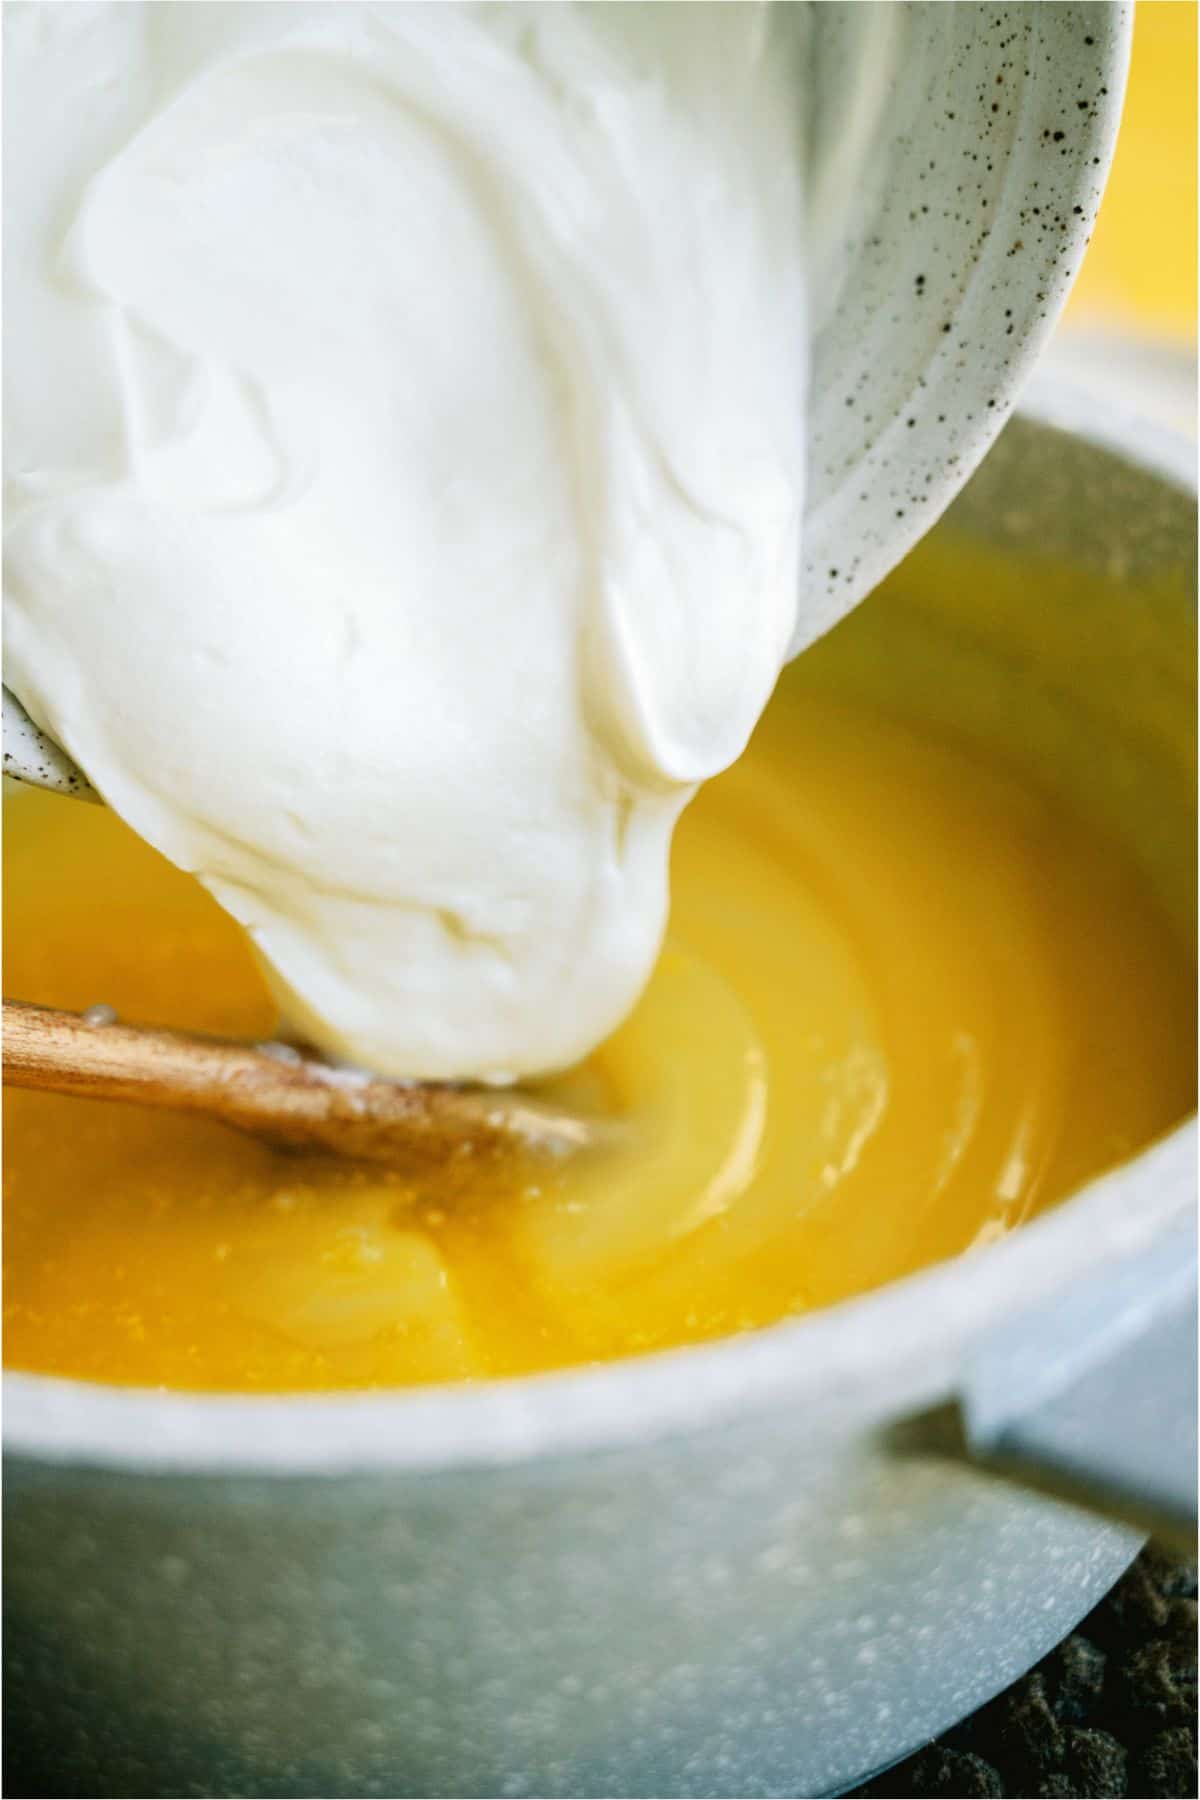 Adding greek yogurt mixture to lemon mixture in saucepan